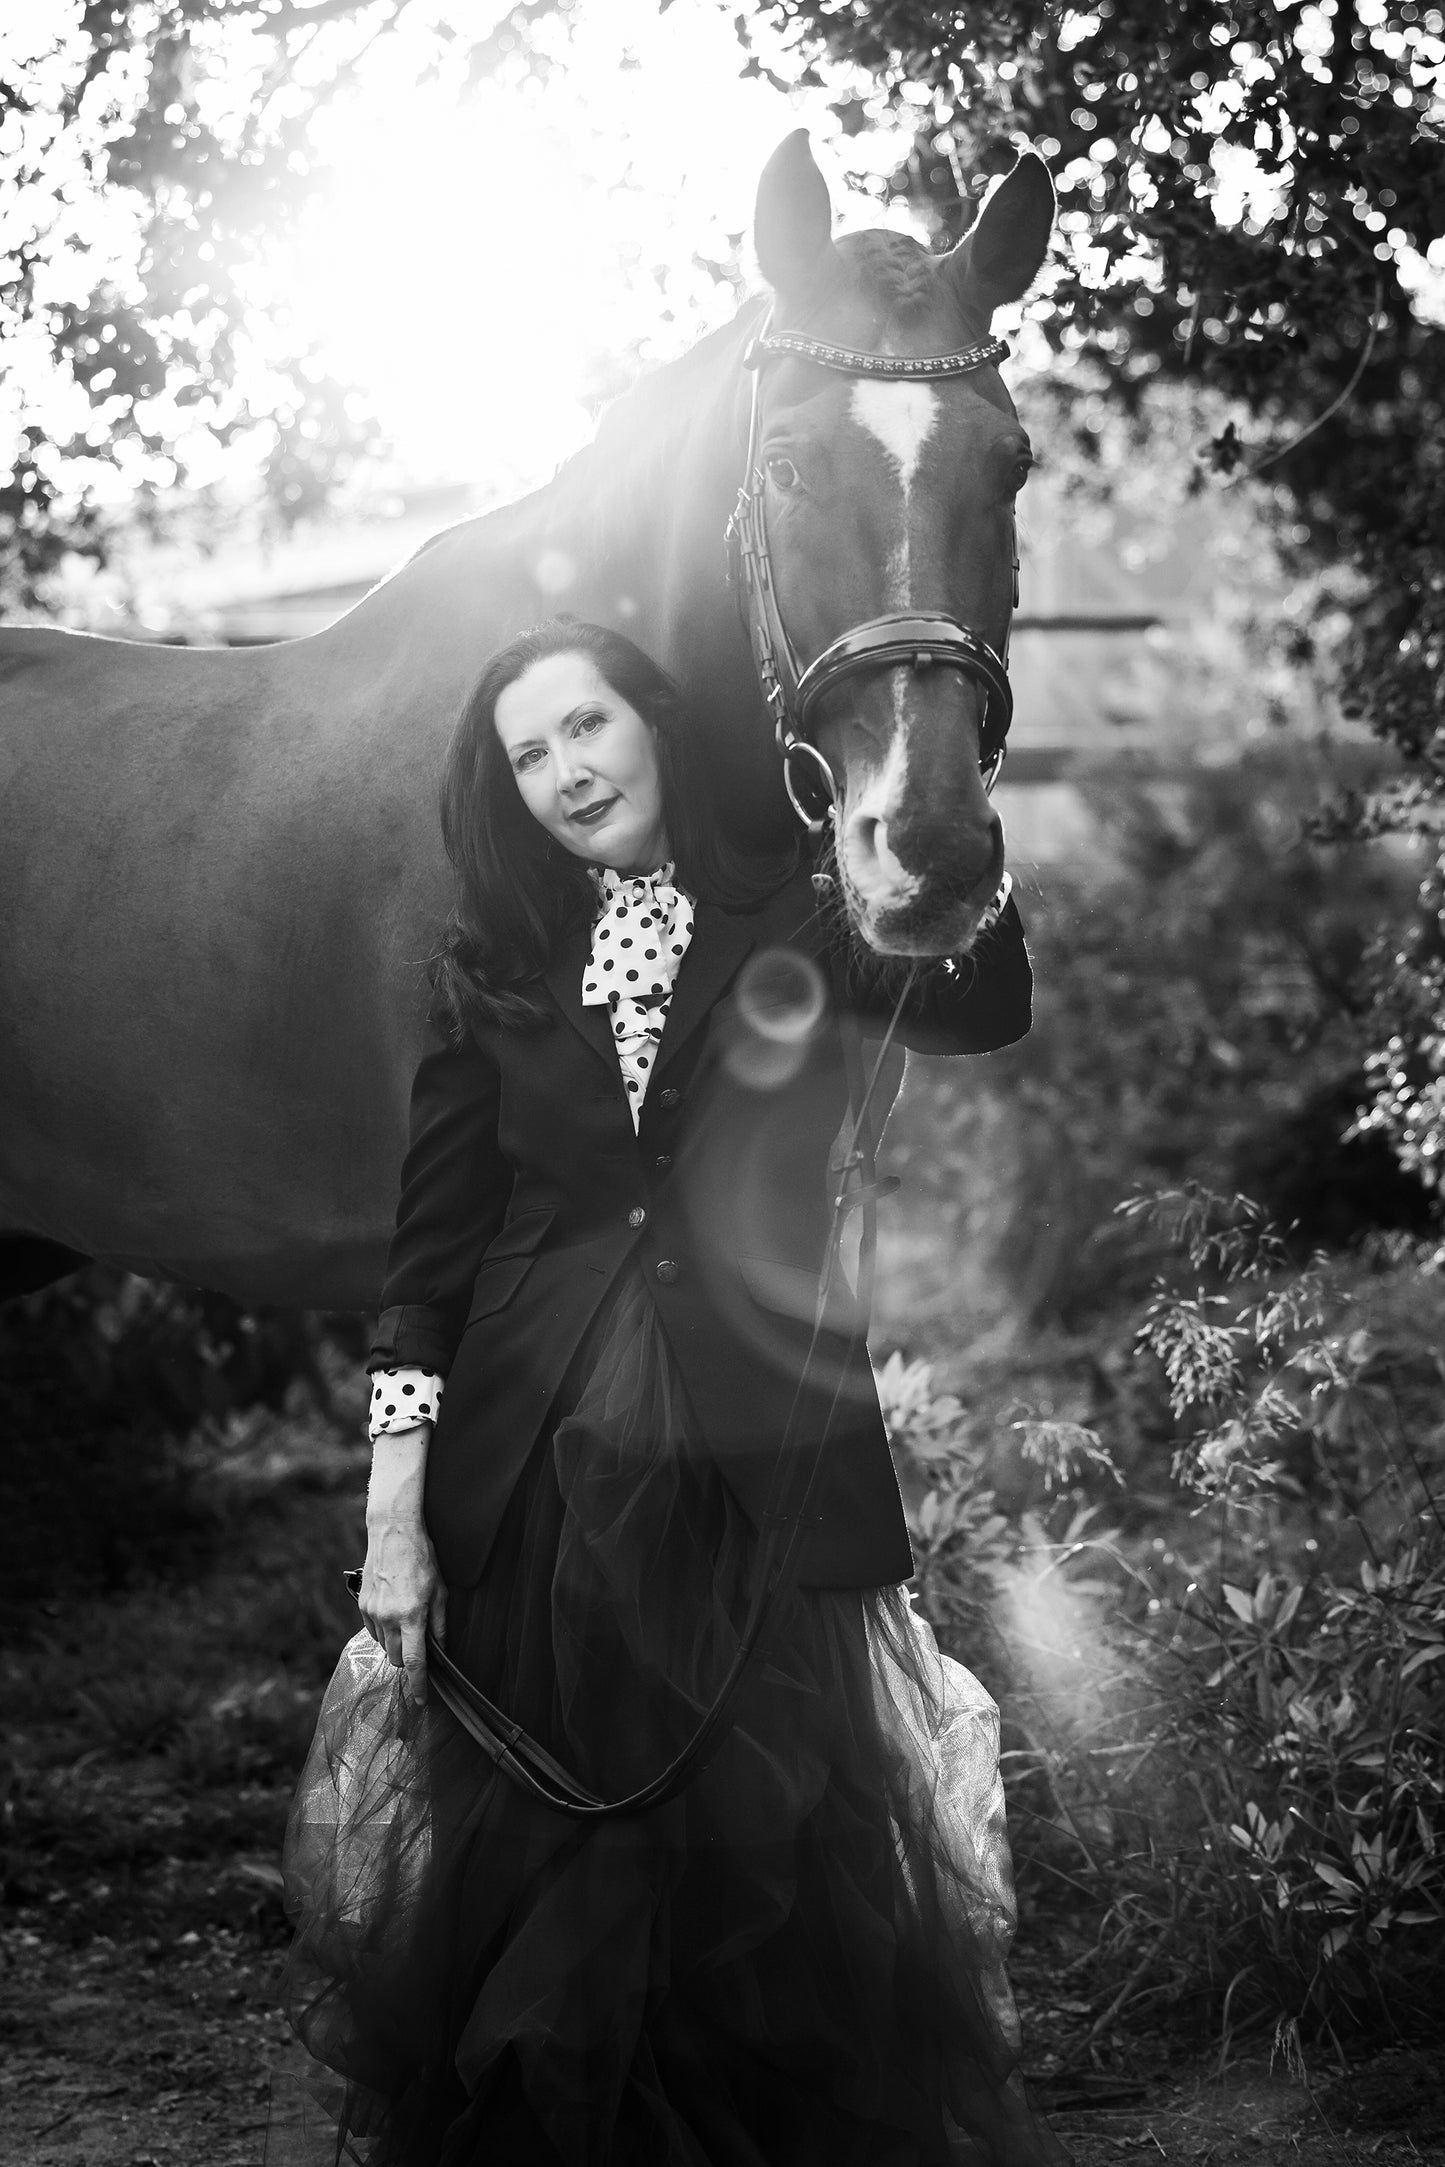 Horse & Rider Equestrian Photoshoot